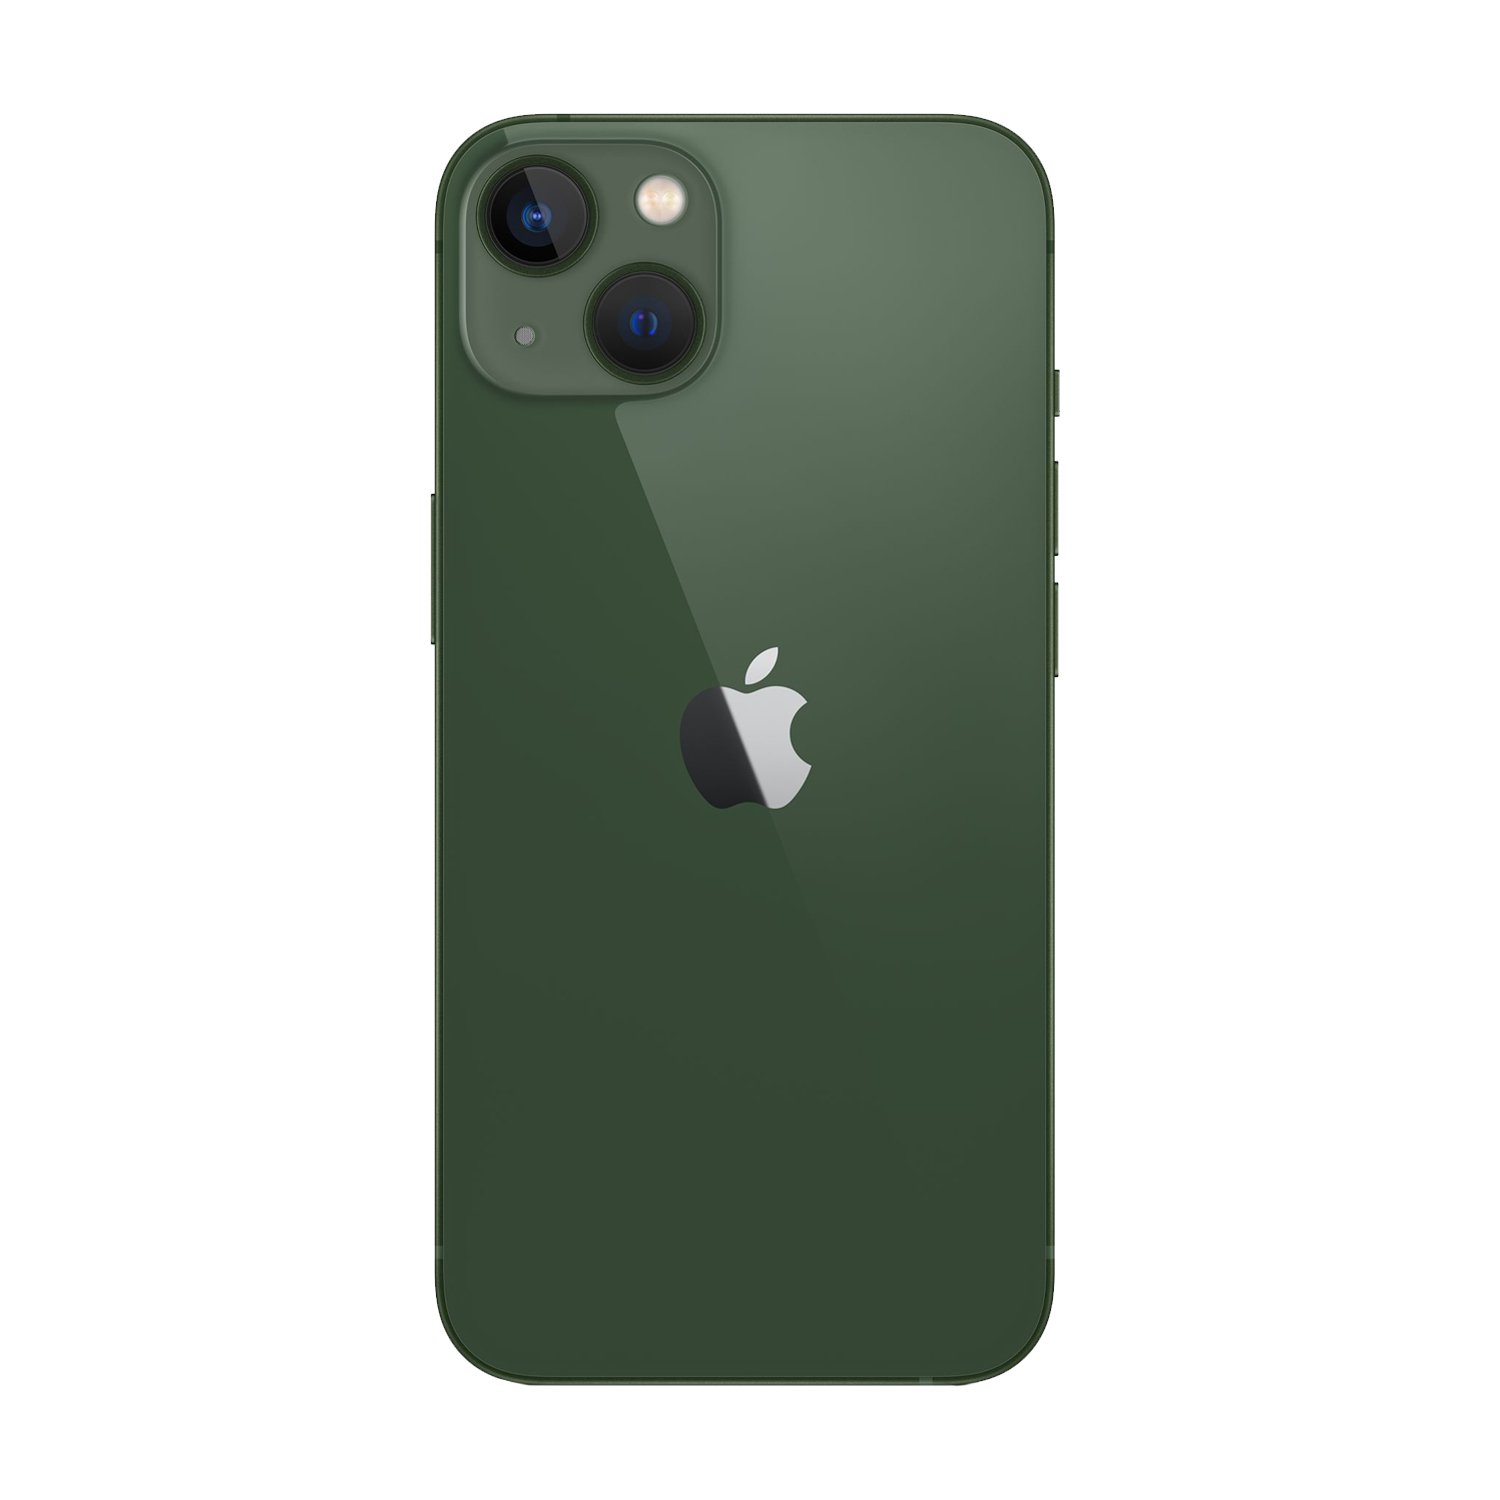 iPhone 11 128GB Verde - Reacondicionado APPLE